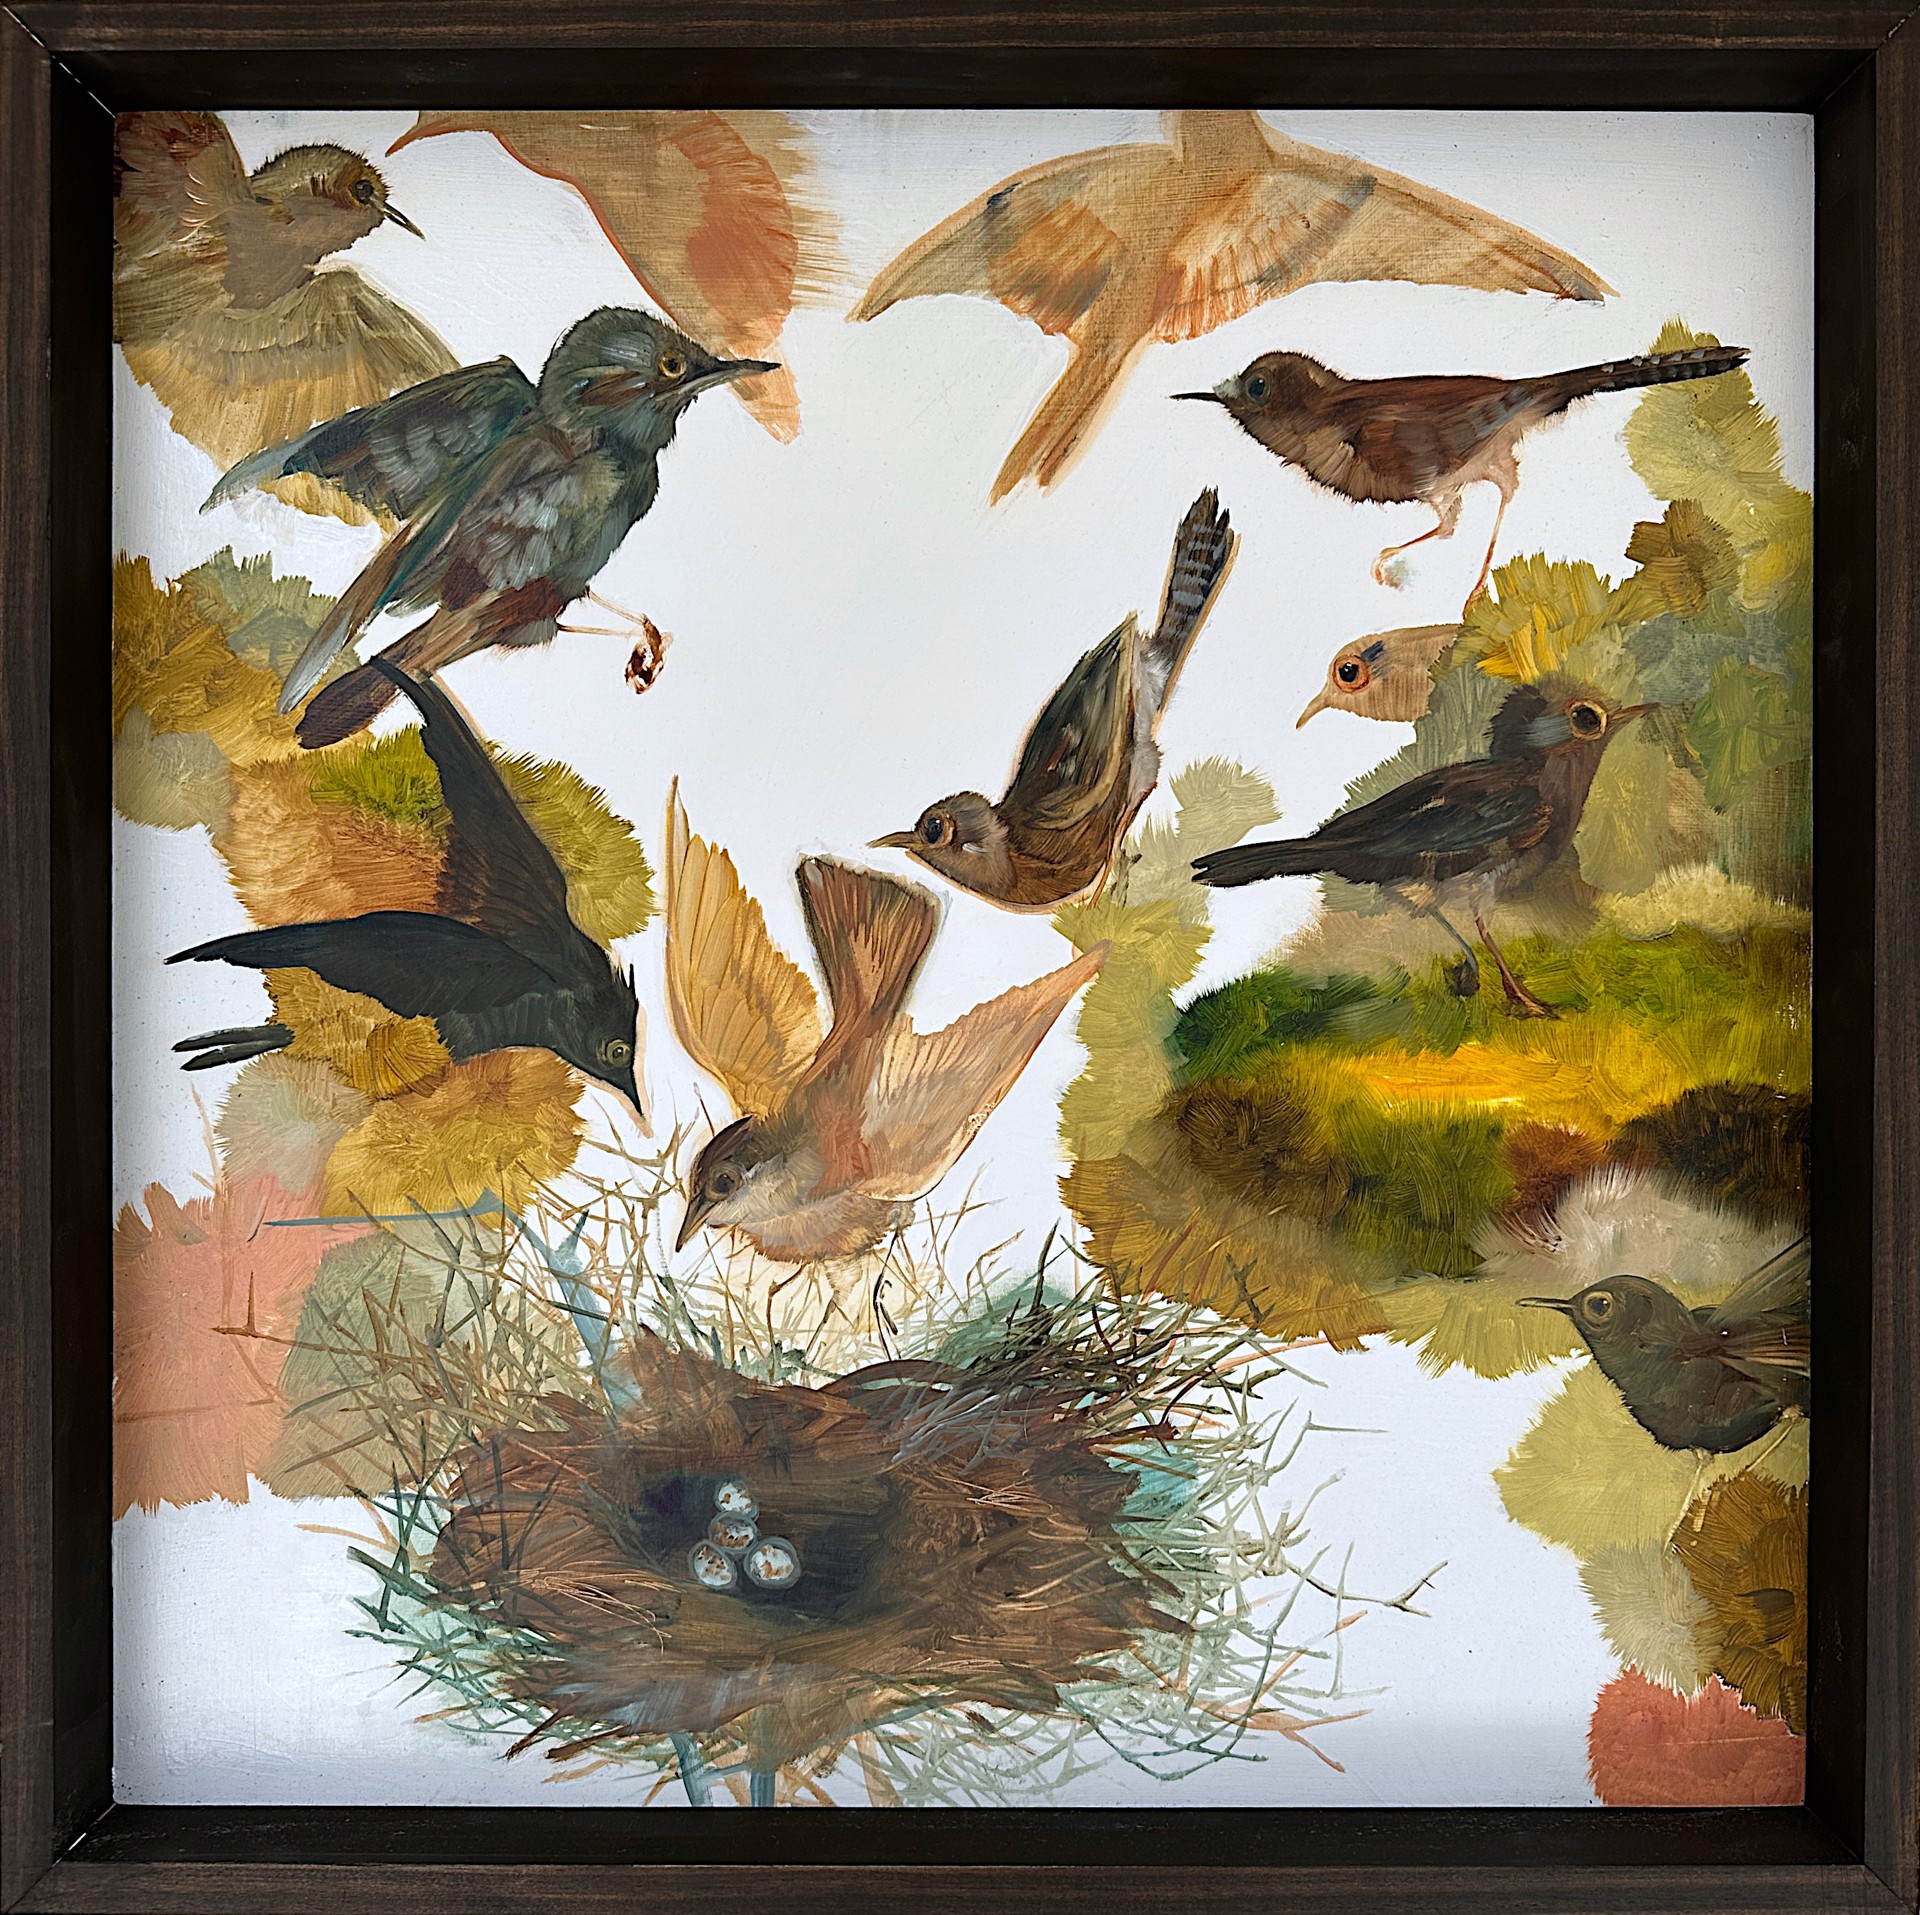 The Nest by Diane Kilgore Condon